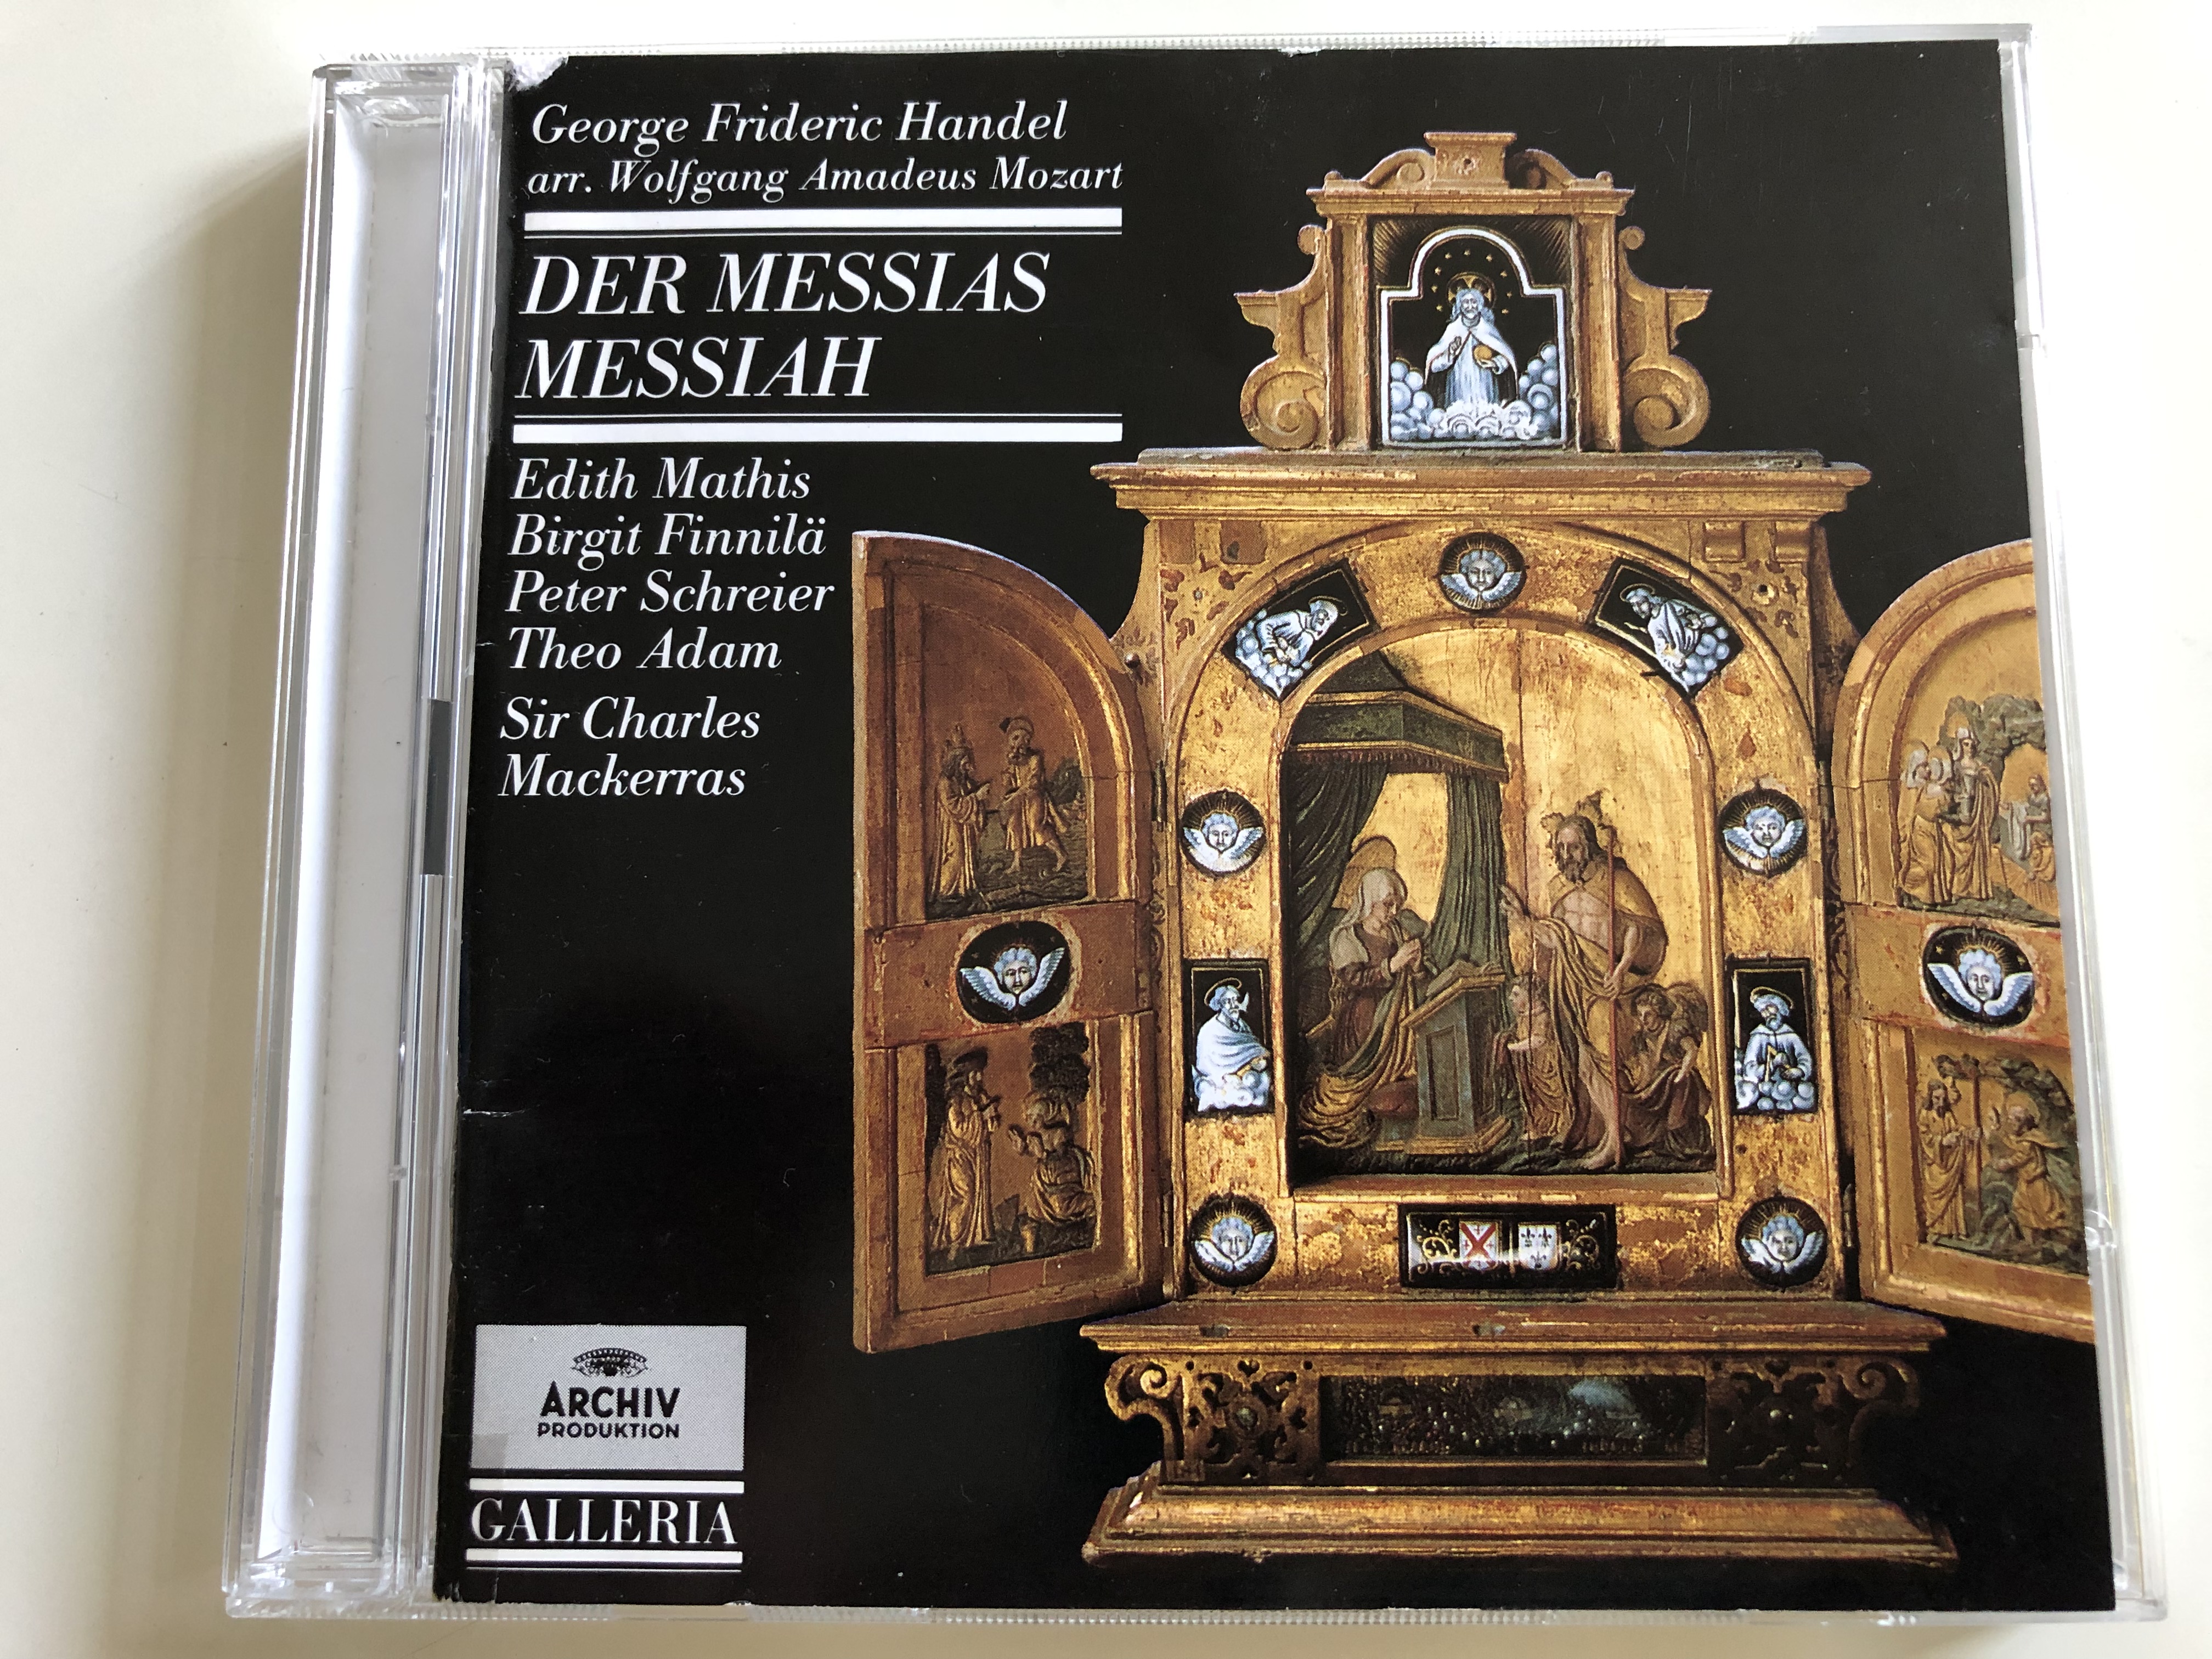 george-frideri-handel-der-messias-messiah-edith-mathis-birgit-finnil-peter-schreier-theo-adam-sir-charles-mackerras-2x-audio-cd-1974-recording-1-.jpg